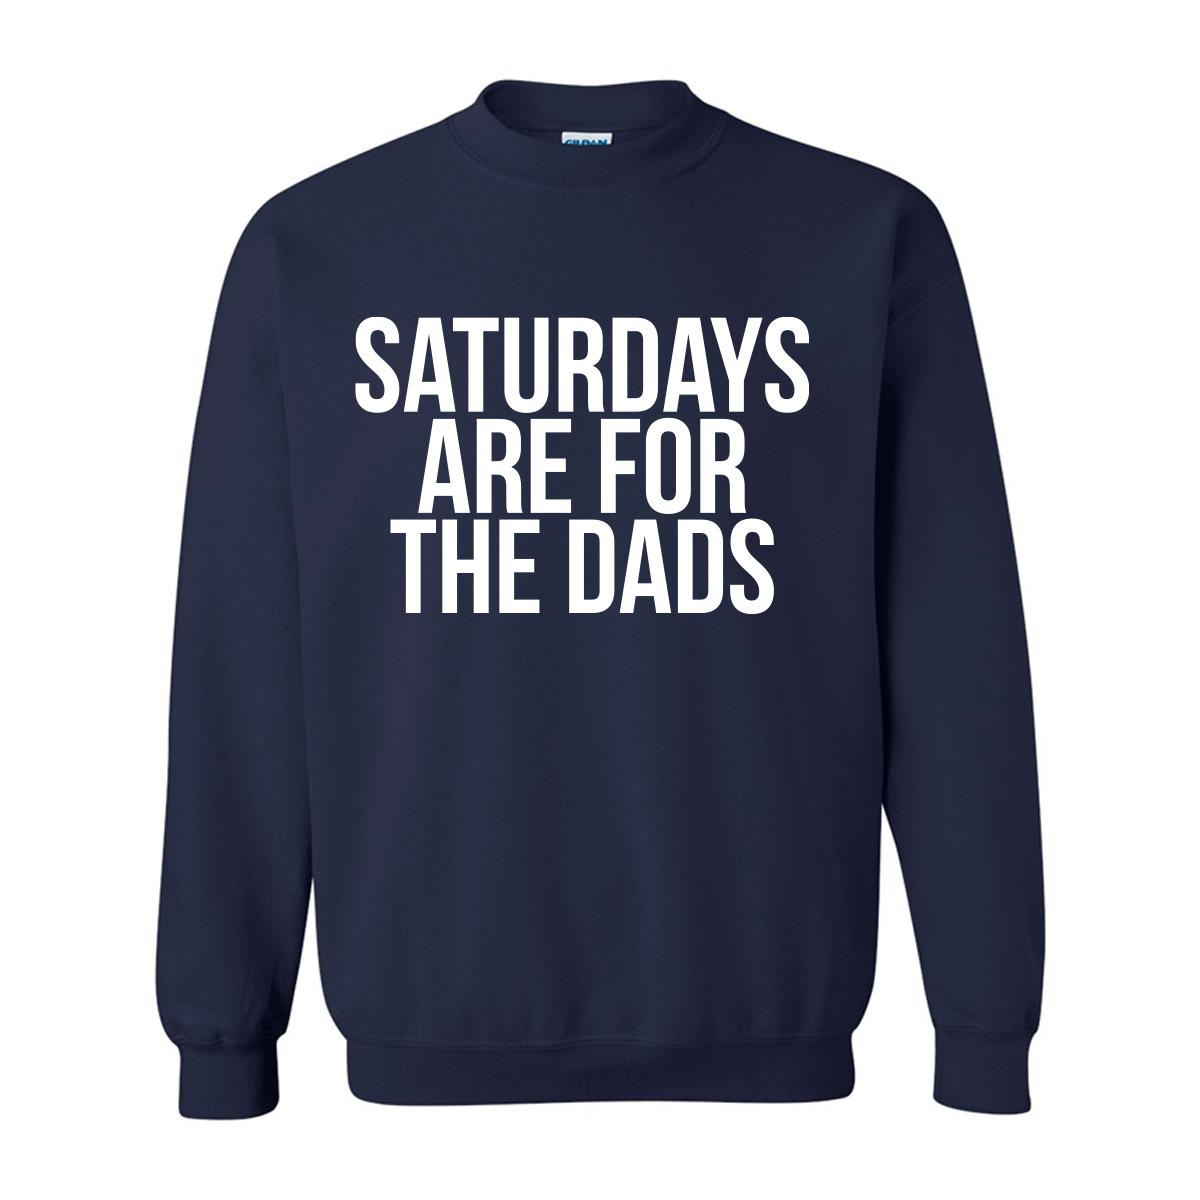 Saturdays Are For The Dads Crewneck-Crewnecks-SAFTB-Navy-S-Barstool Sports